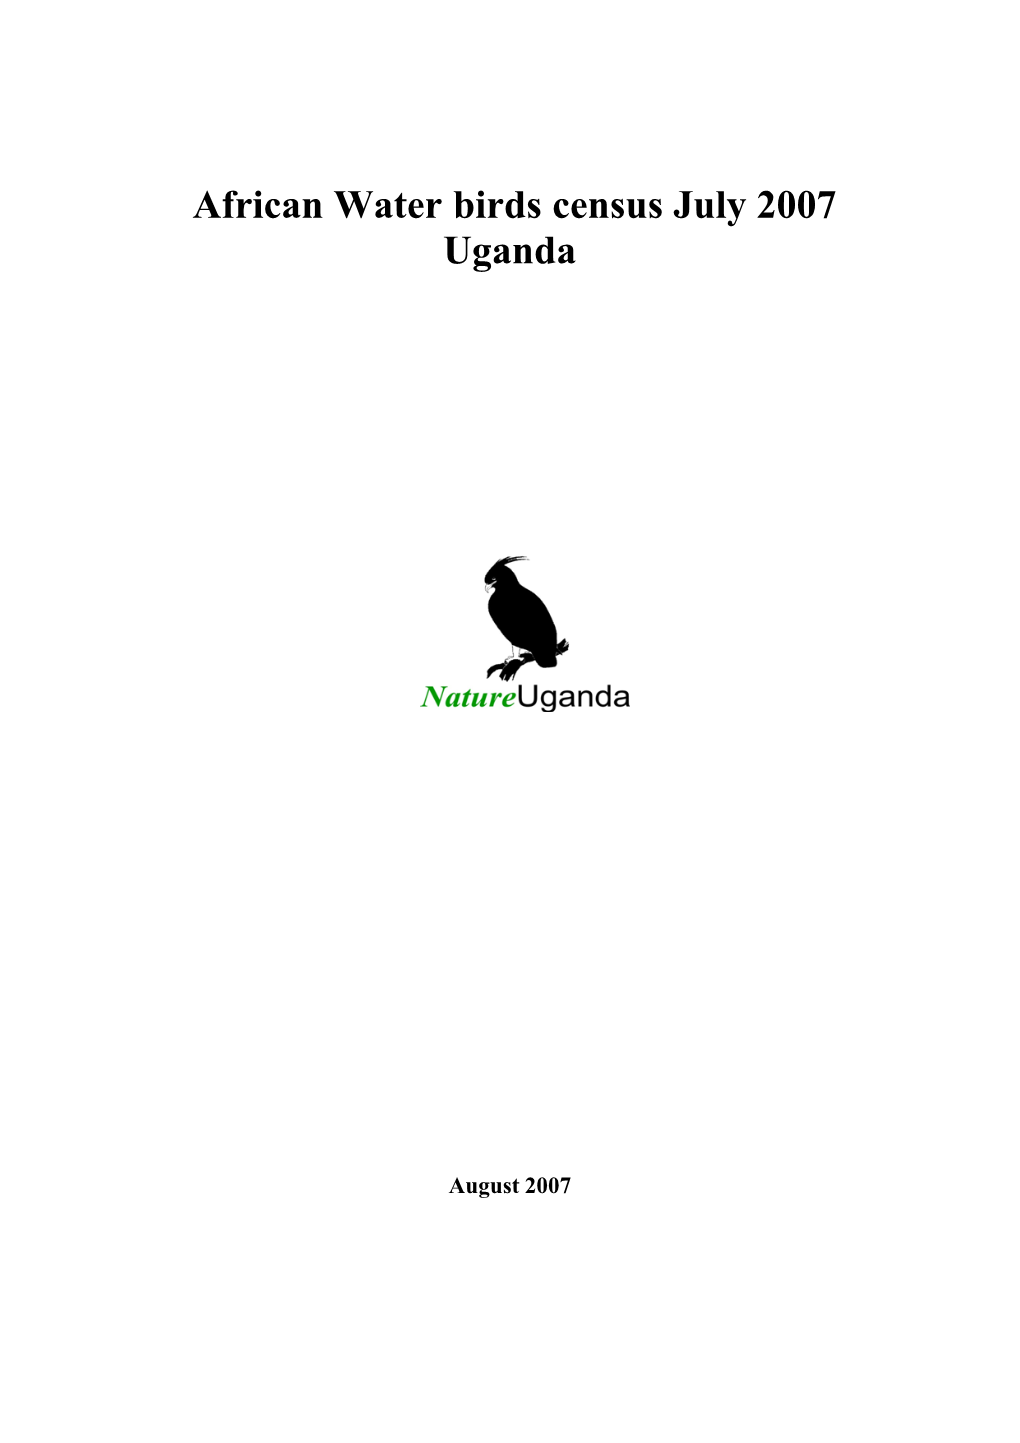 African Water Birds Census July 2007 Uganda